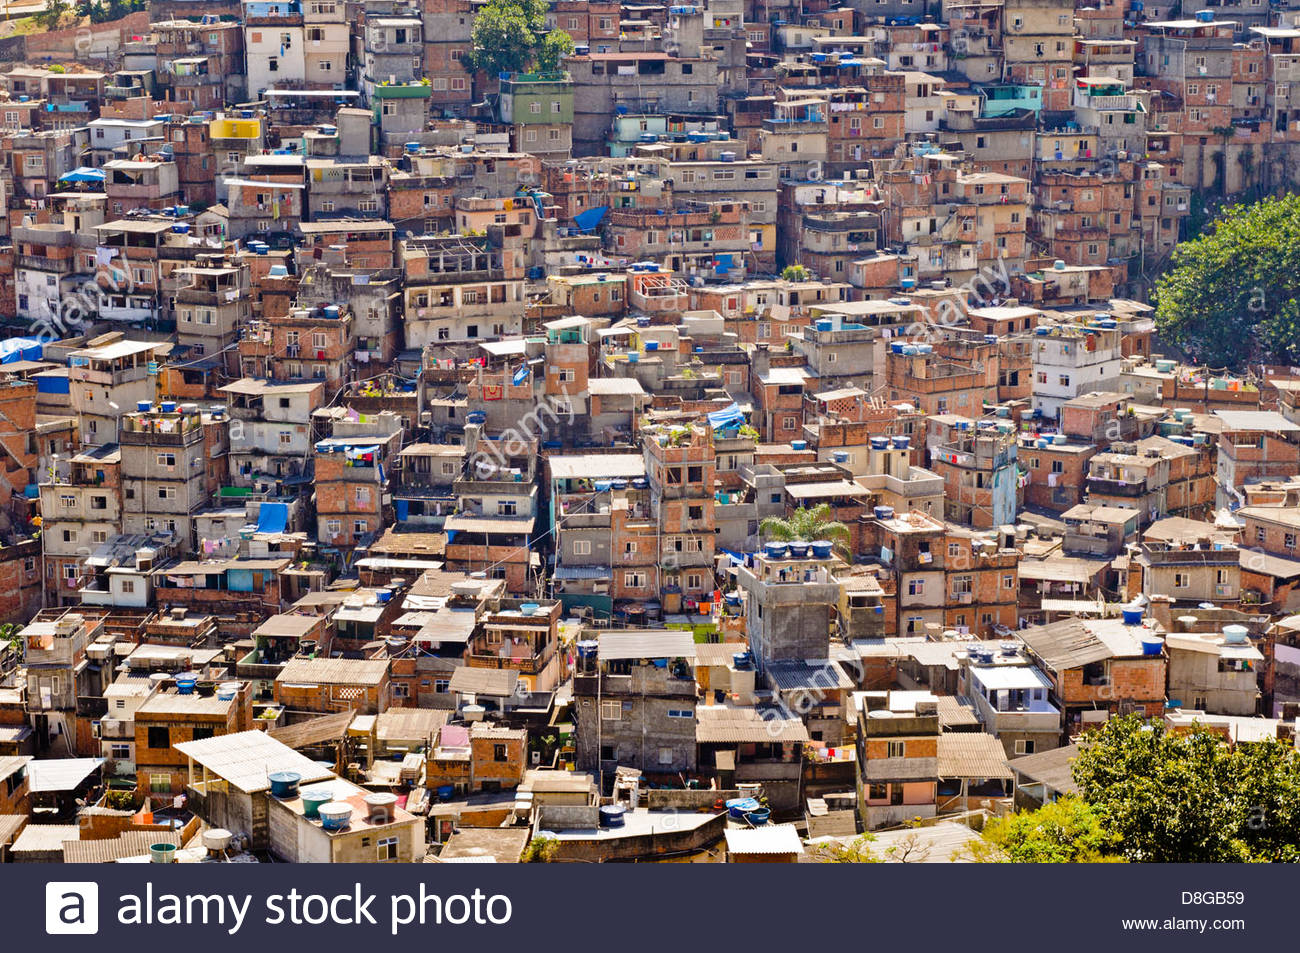 old-slum-of-rocinha-housing-rio-de-janeiro-brazil-D8GB59.jpg